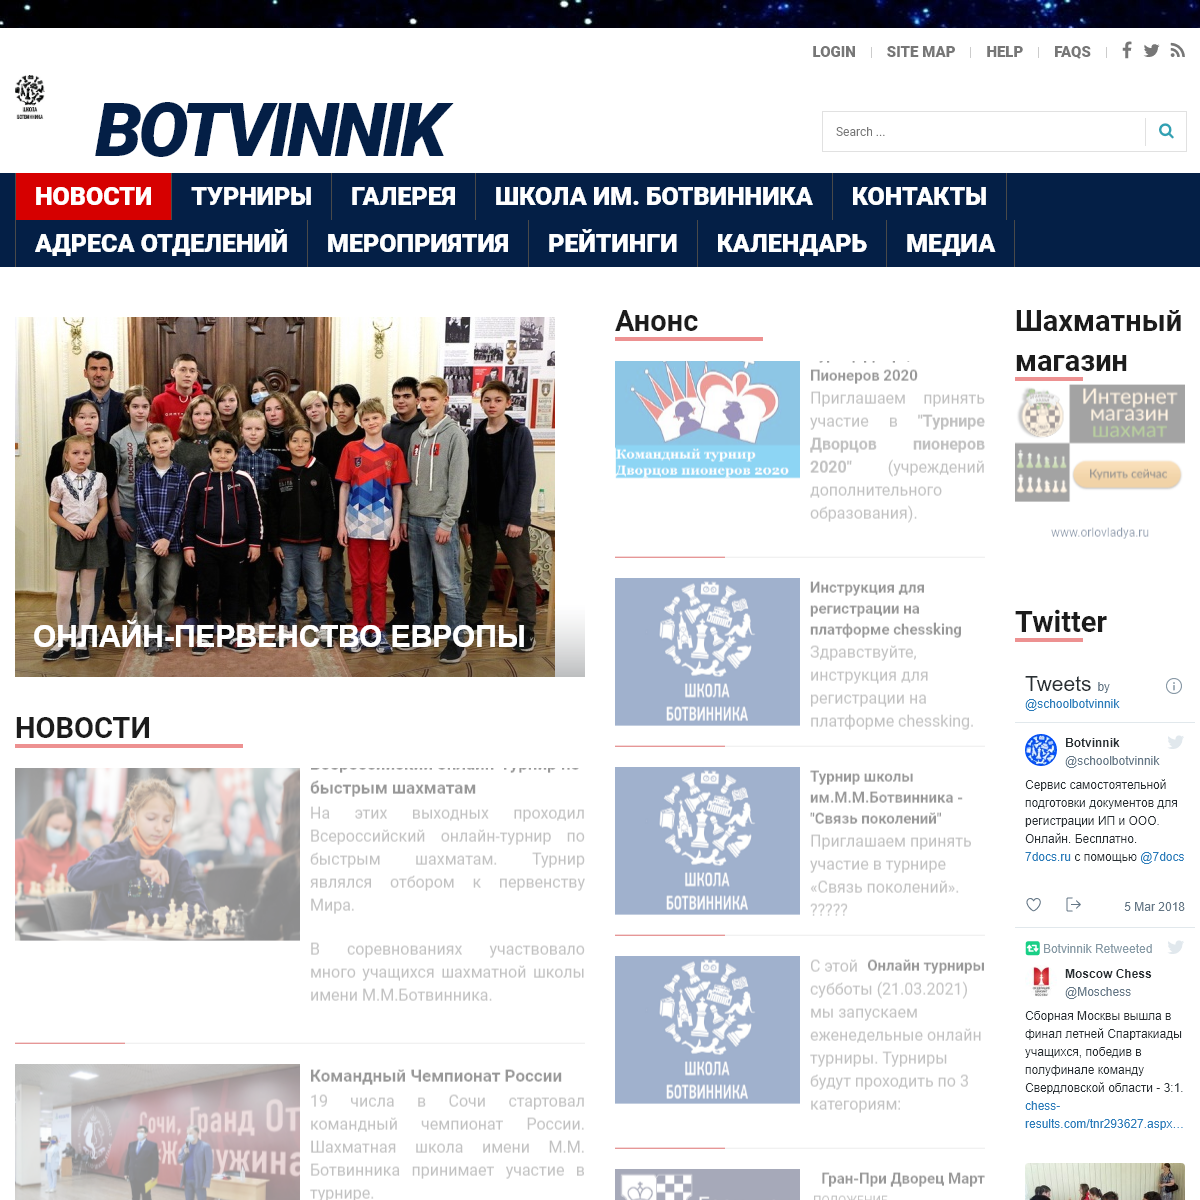 A complete backup of botvinnik.ru